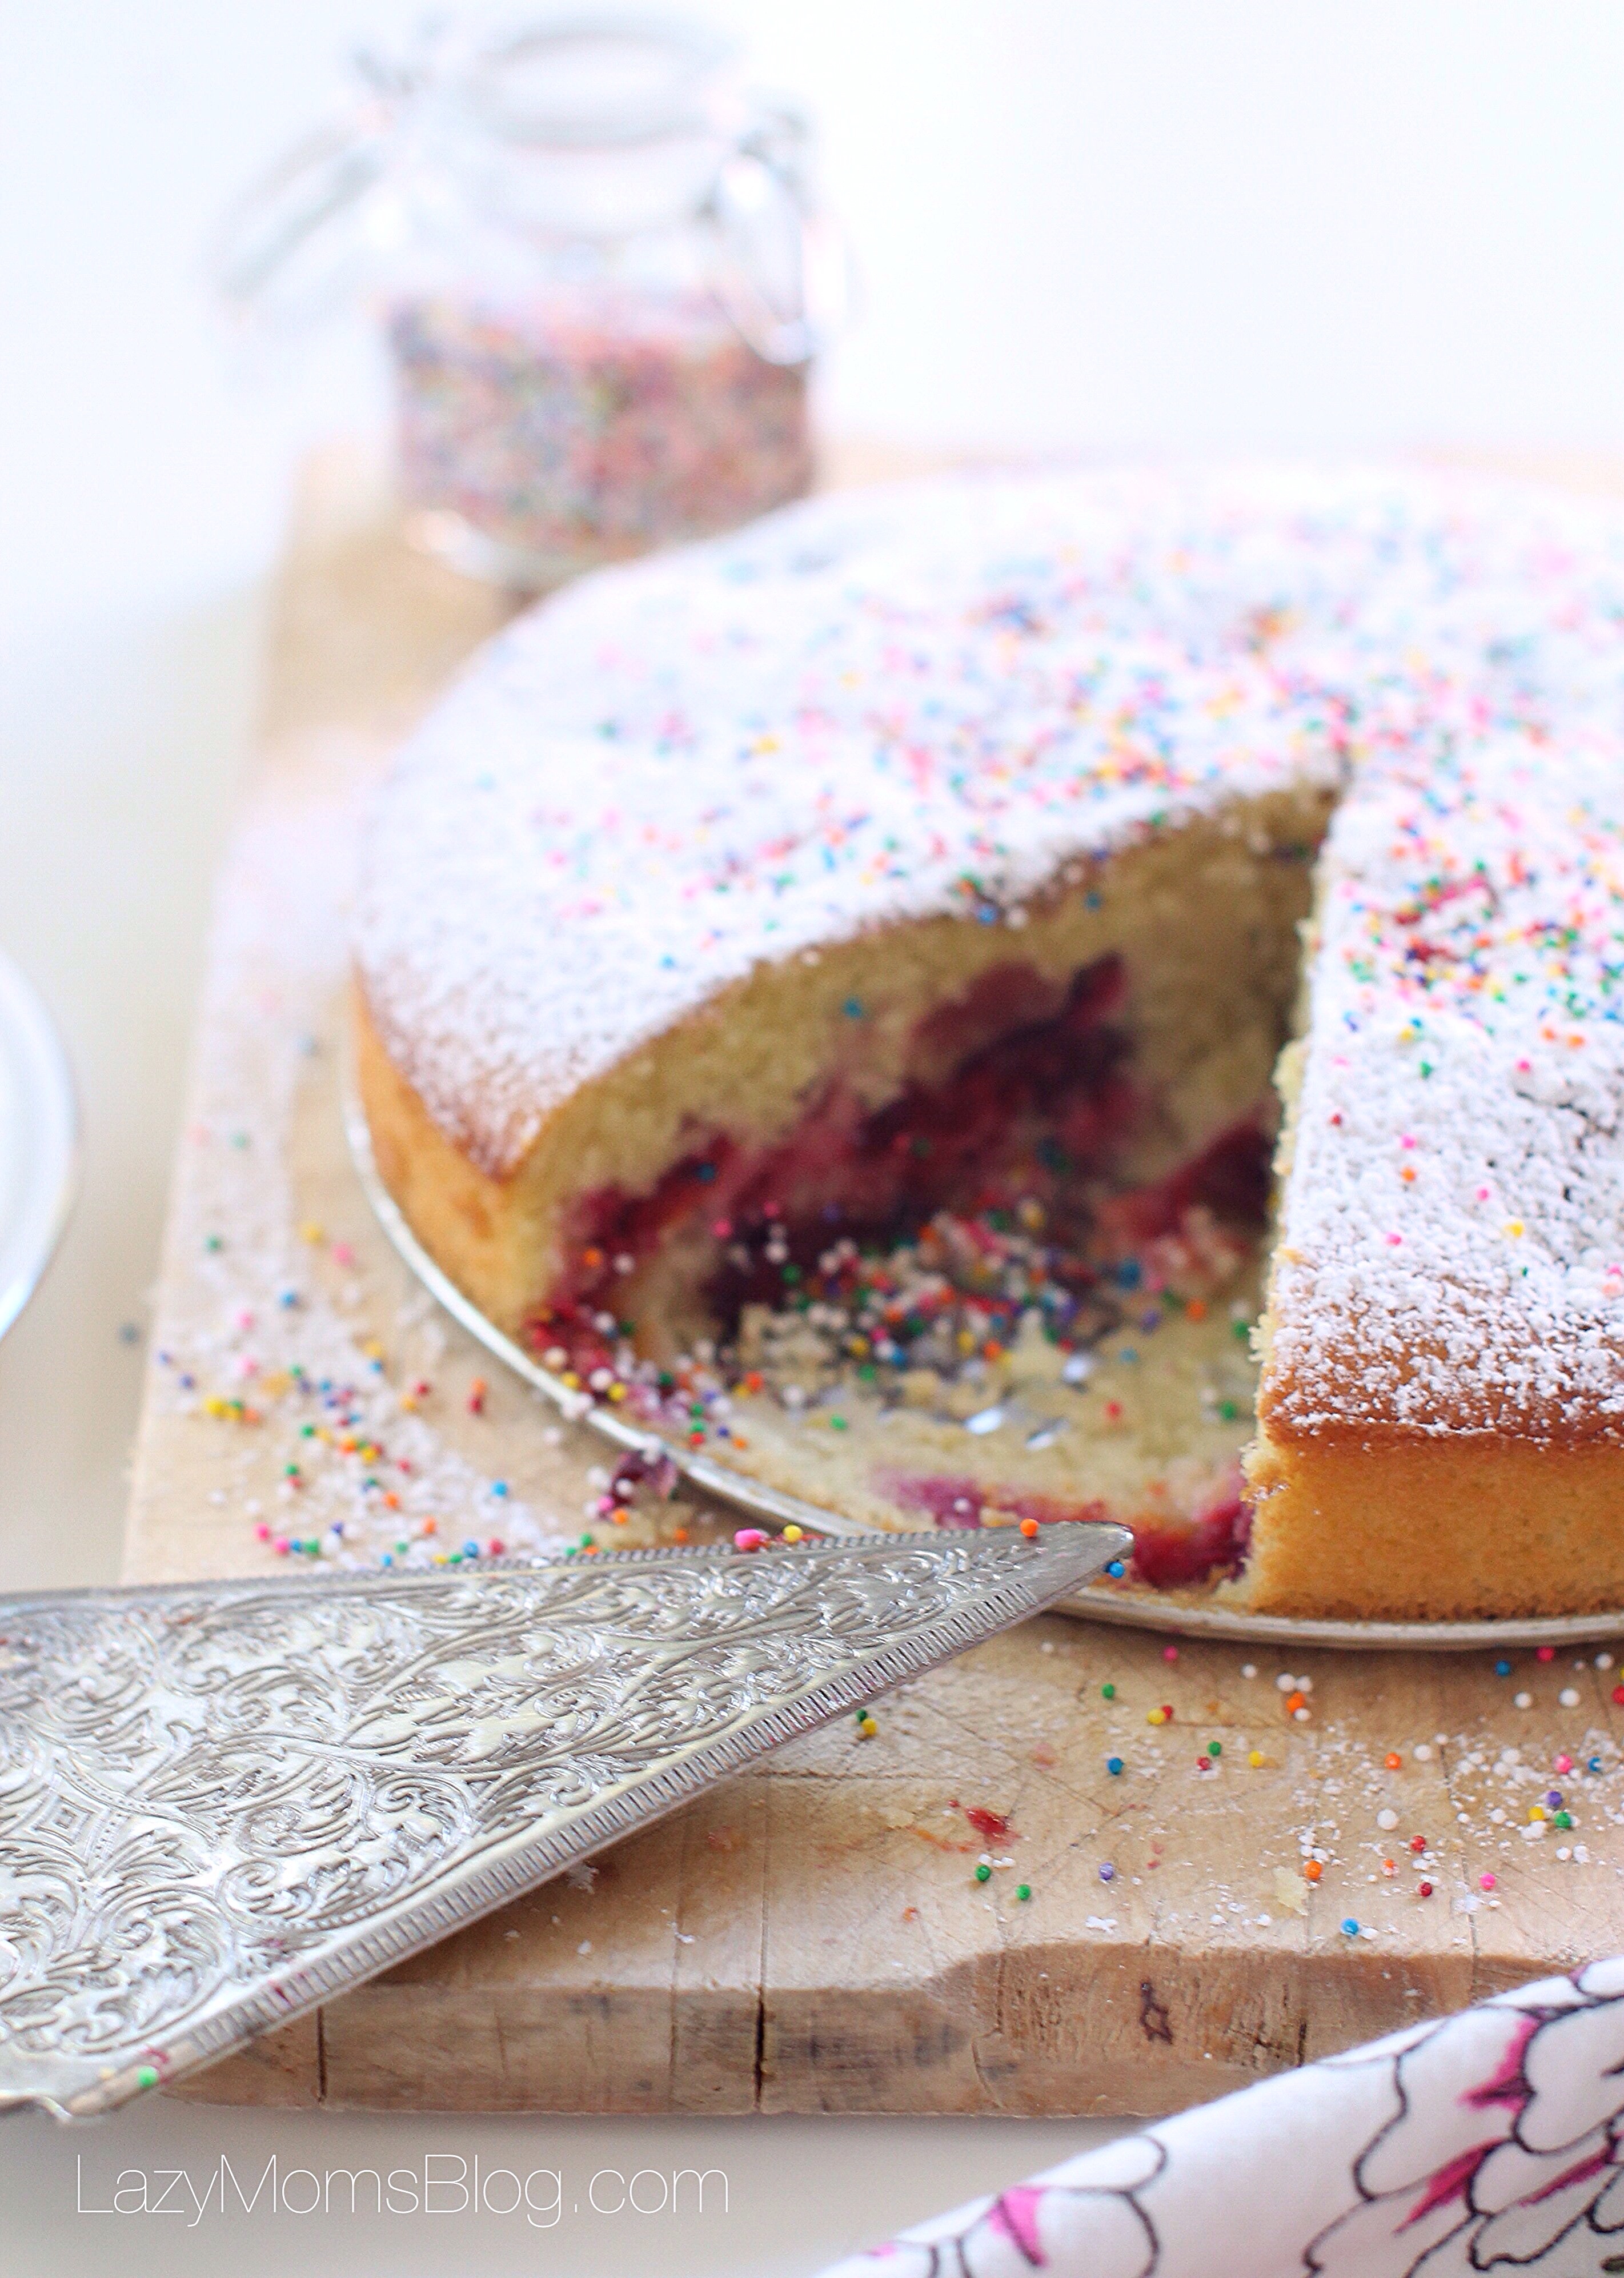 This plum cake tastes just like baked doughnuts with plum jam!  